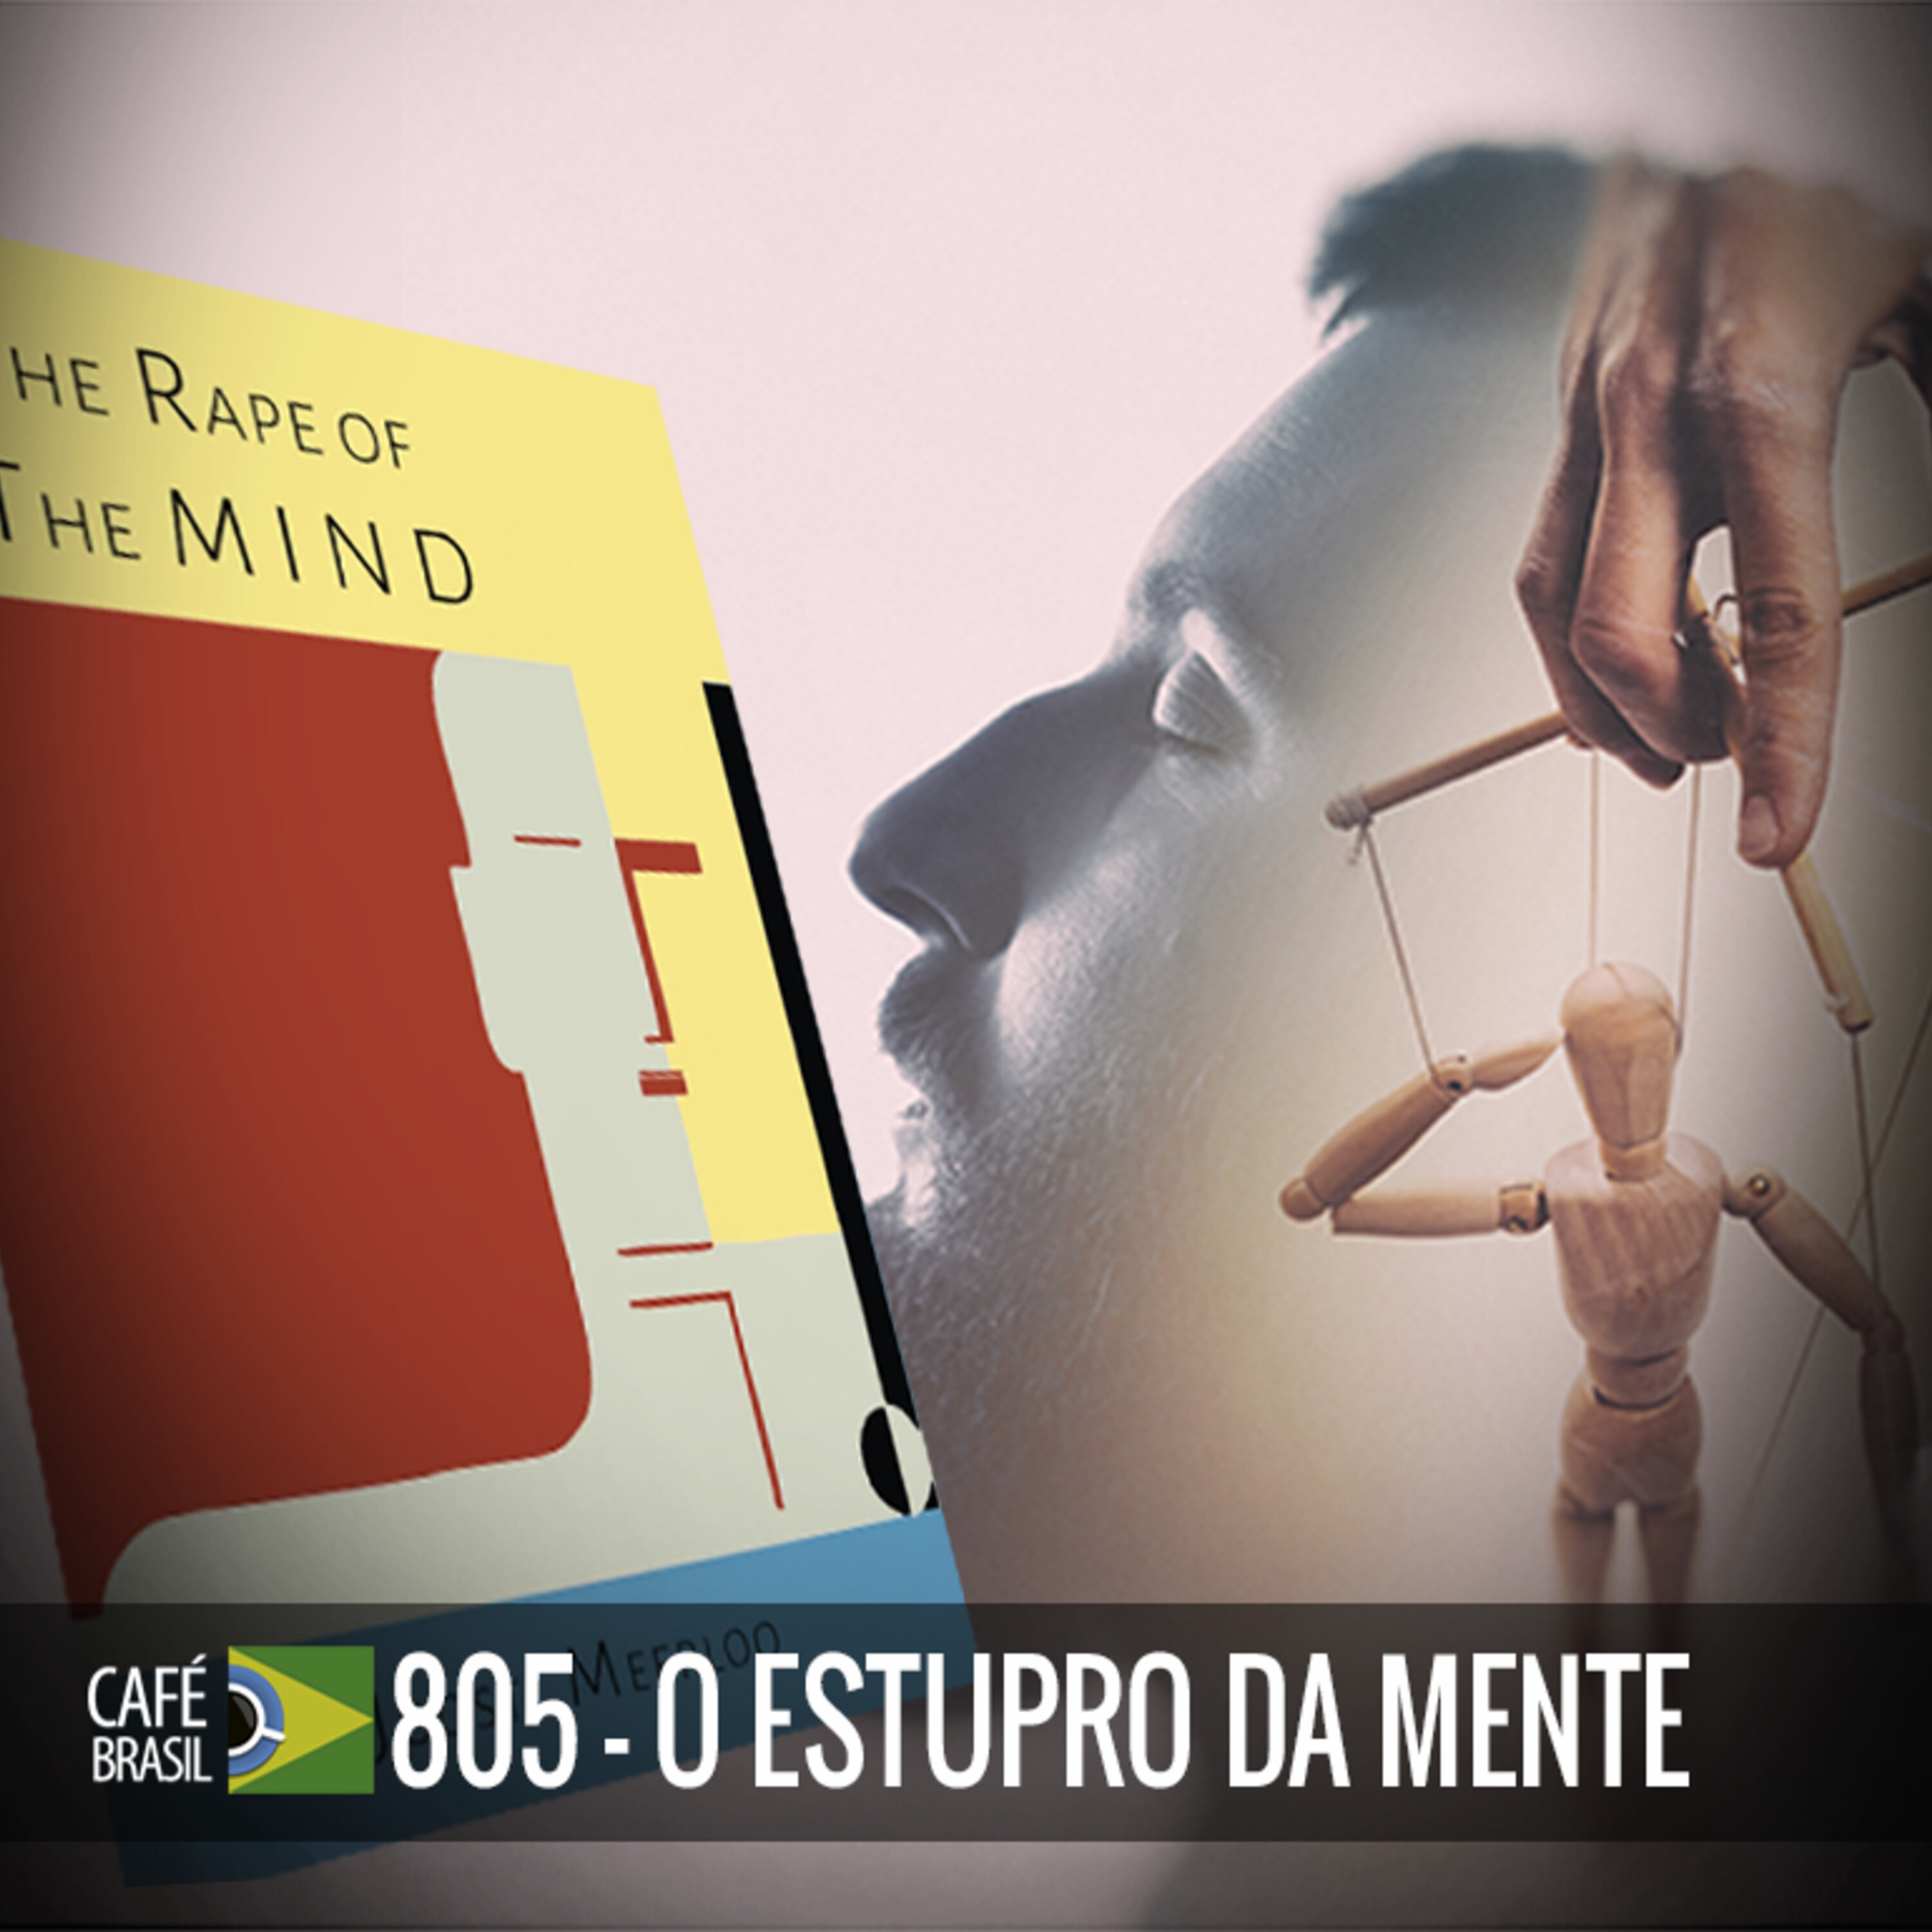 Cafe Brasil 805 - O estupro da mente